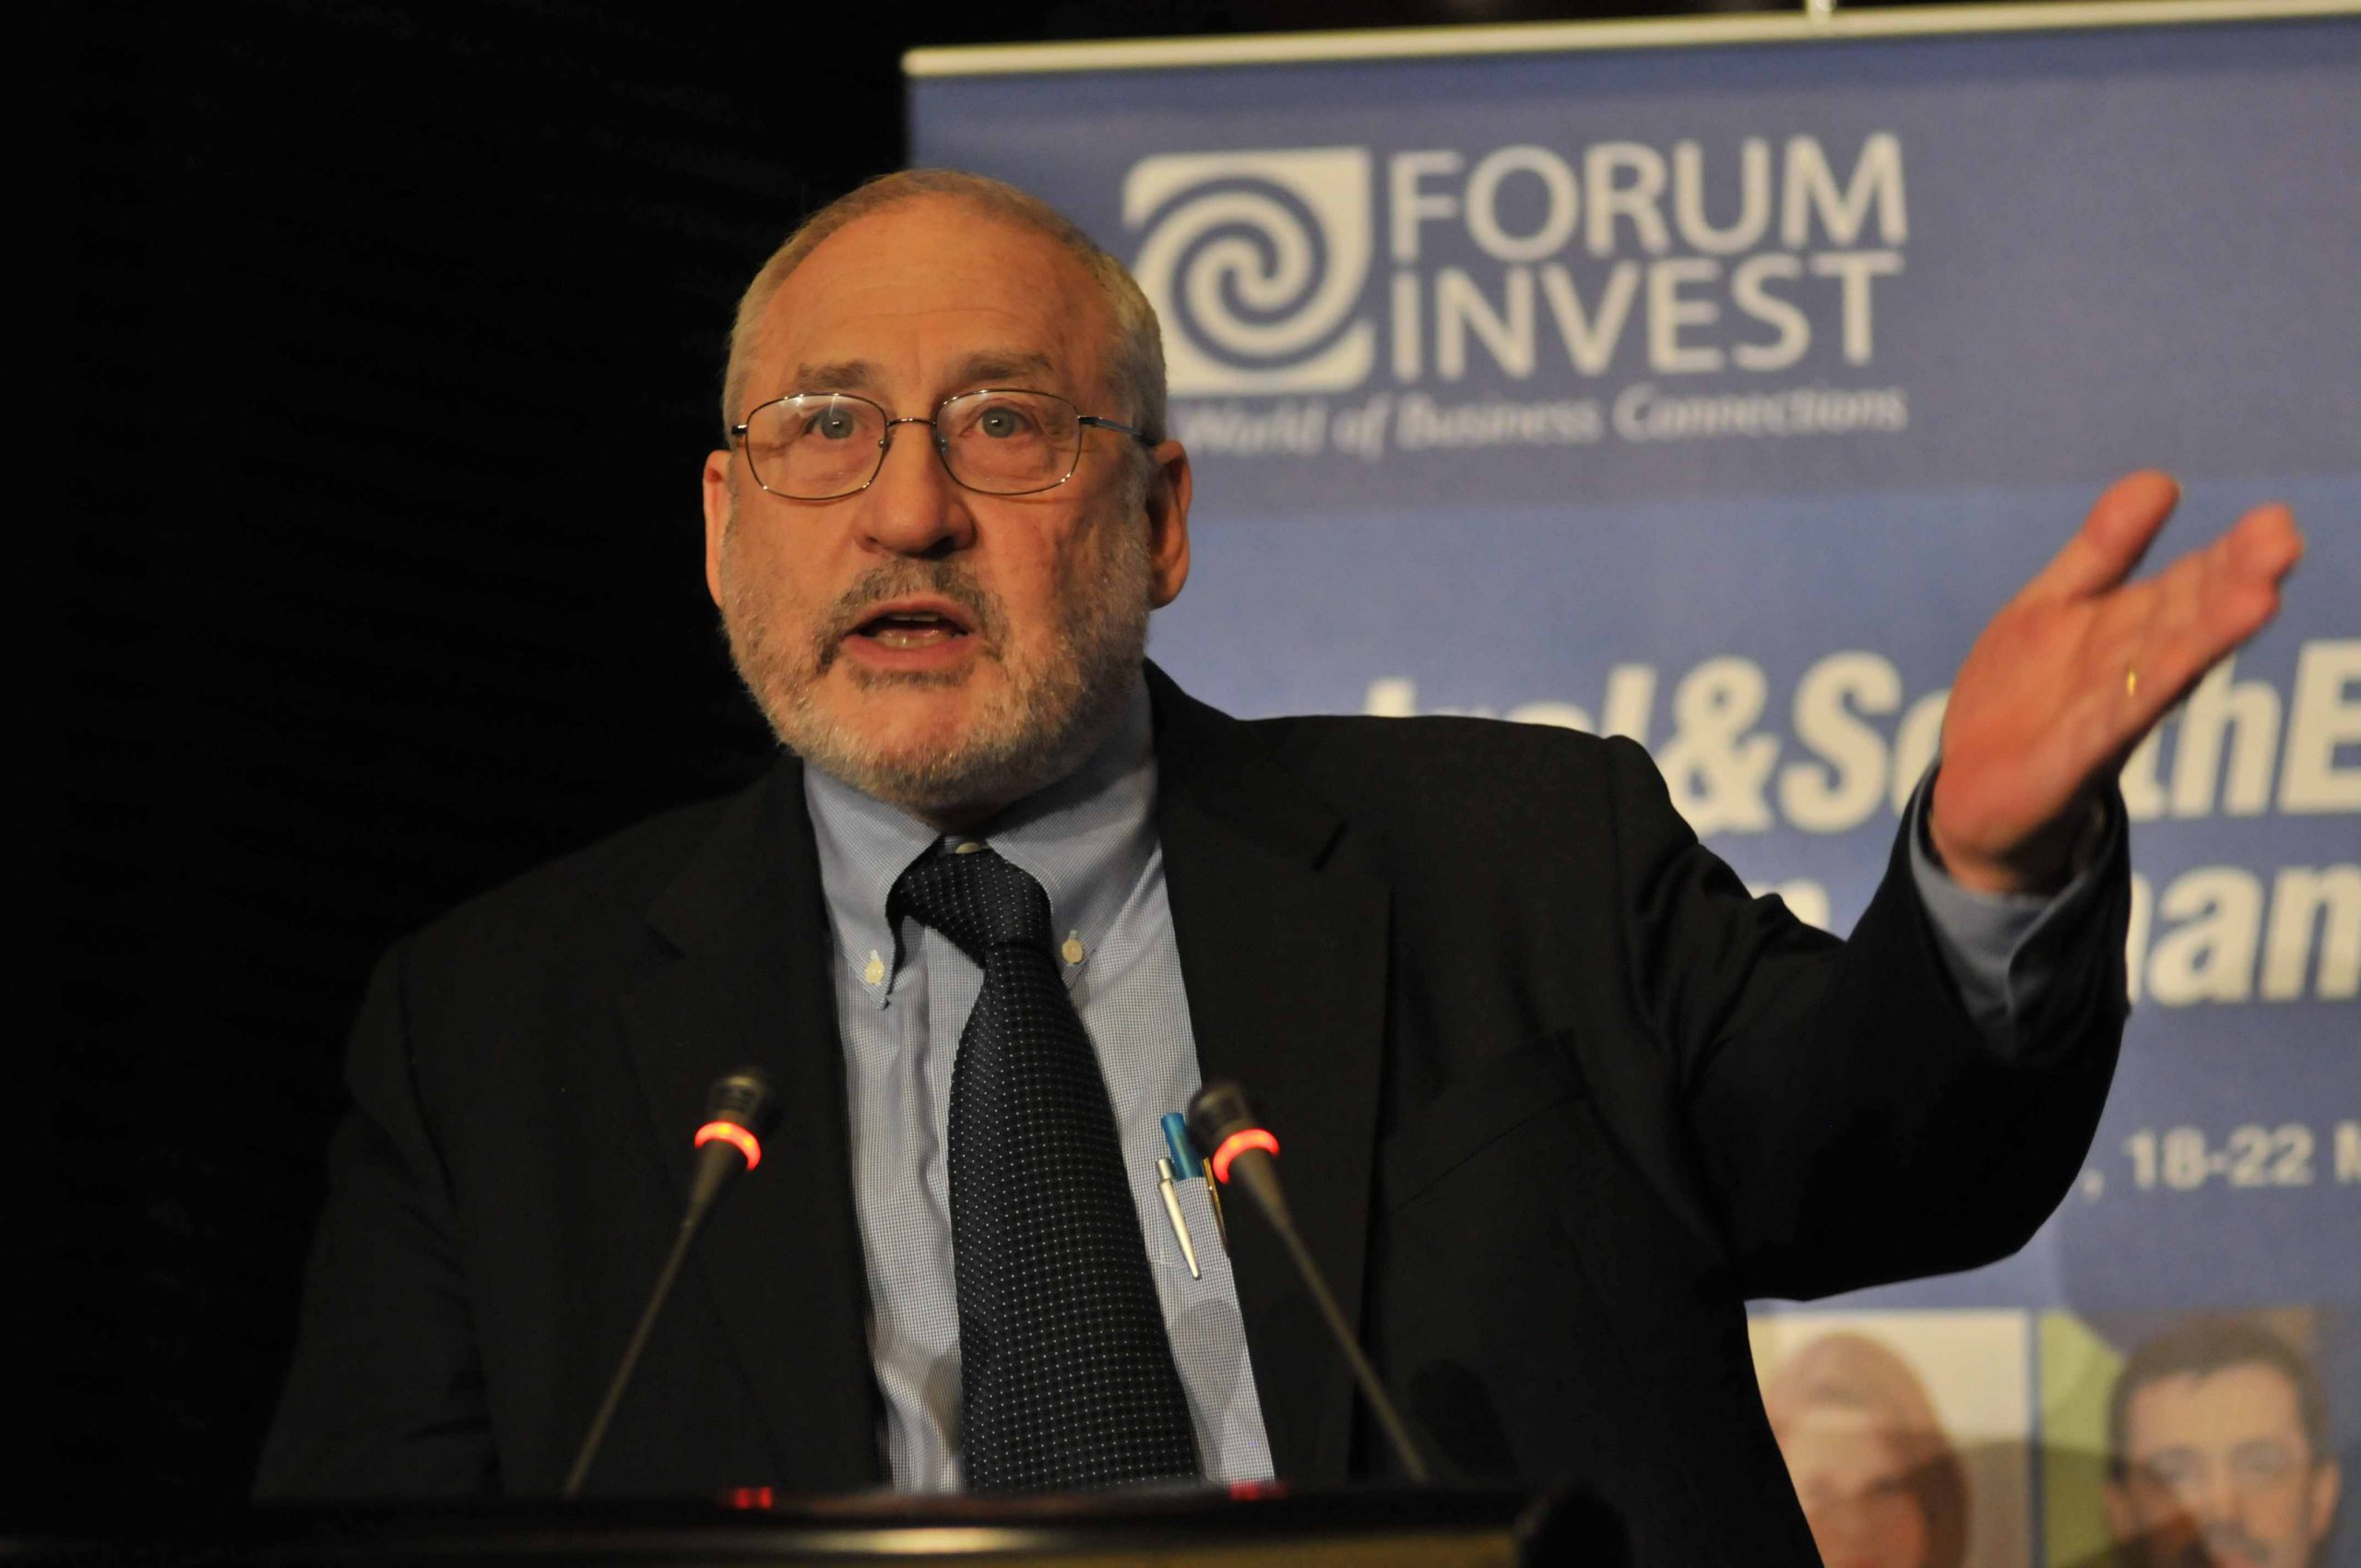 Joseph_Stiglitz_Nobel_Prize_Laureate_at_Forum_Invest_FINANCE_2009